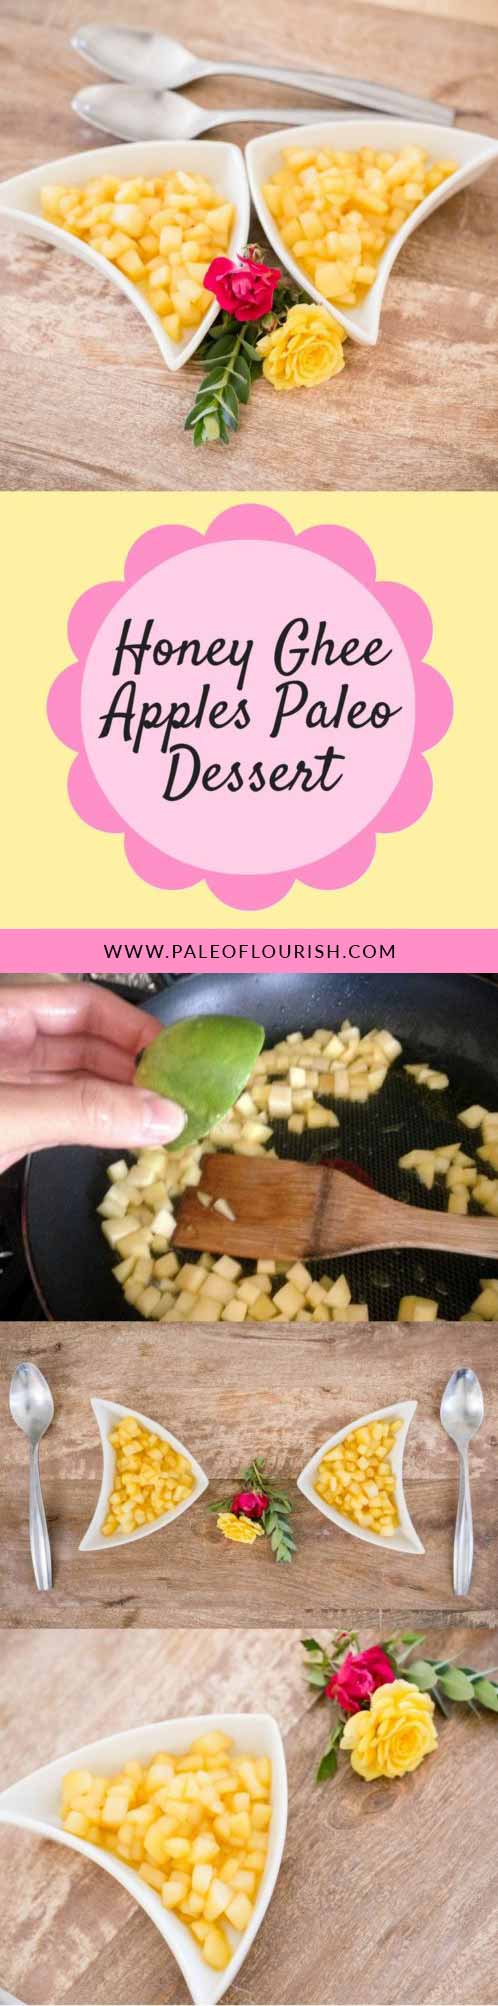 Honey Ghee Apples Paleo Dessert #paleo #recipes #glutenfree https://paleoflourish.com/honey-ghee-apples-paleo-dessert/